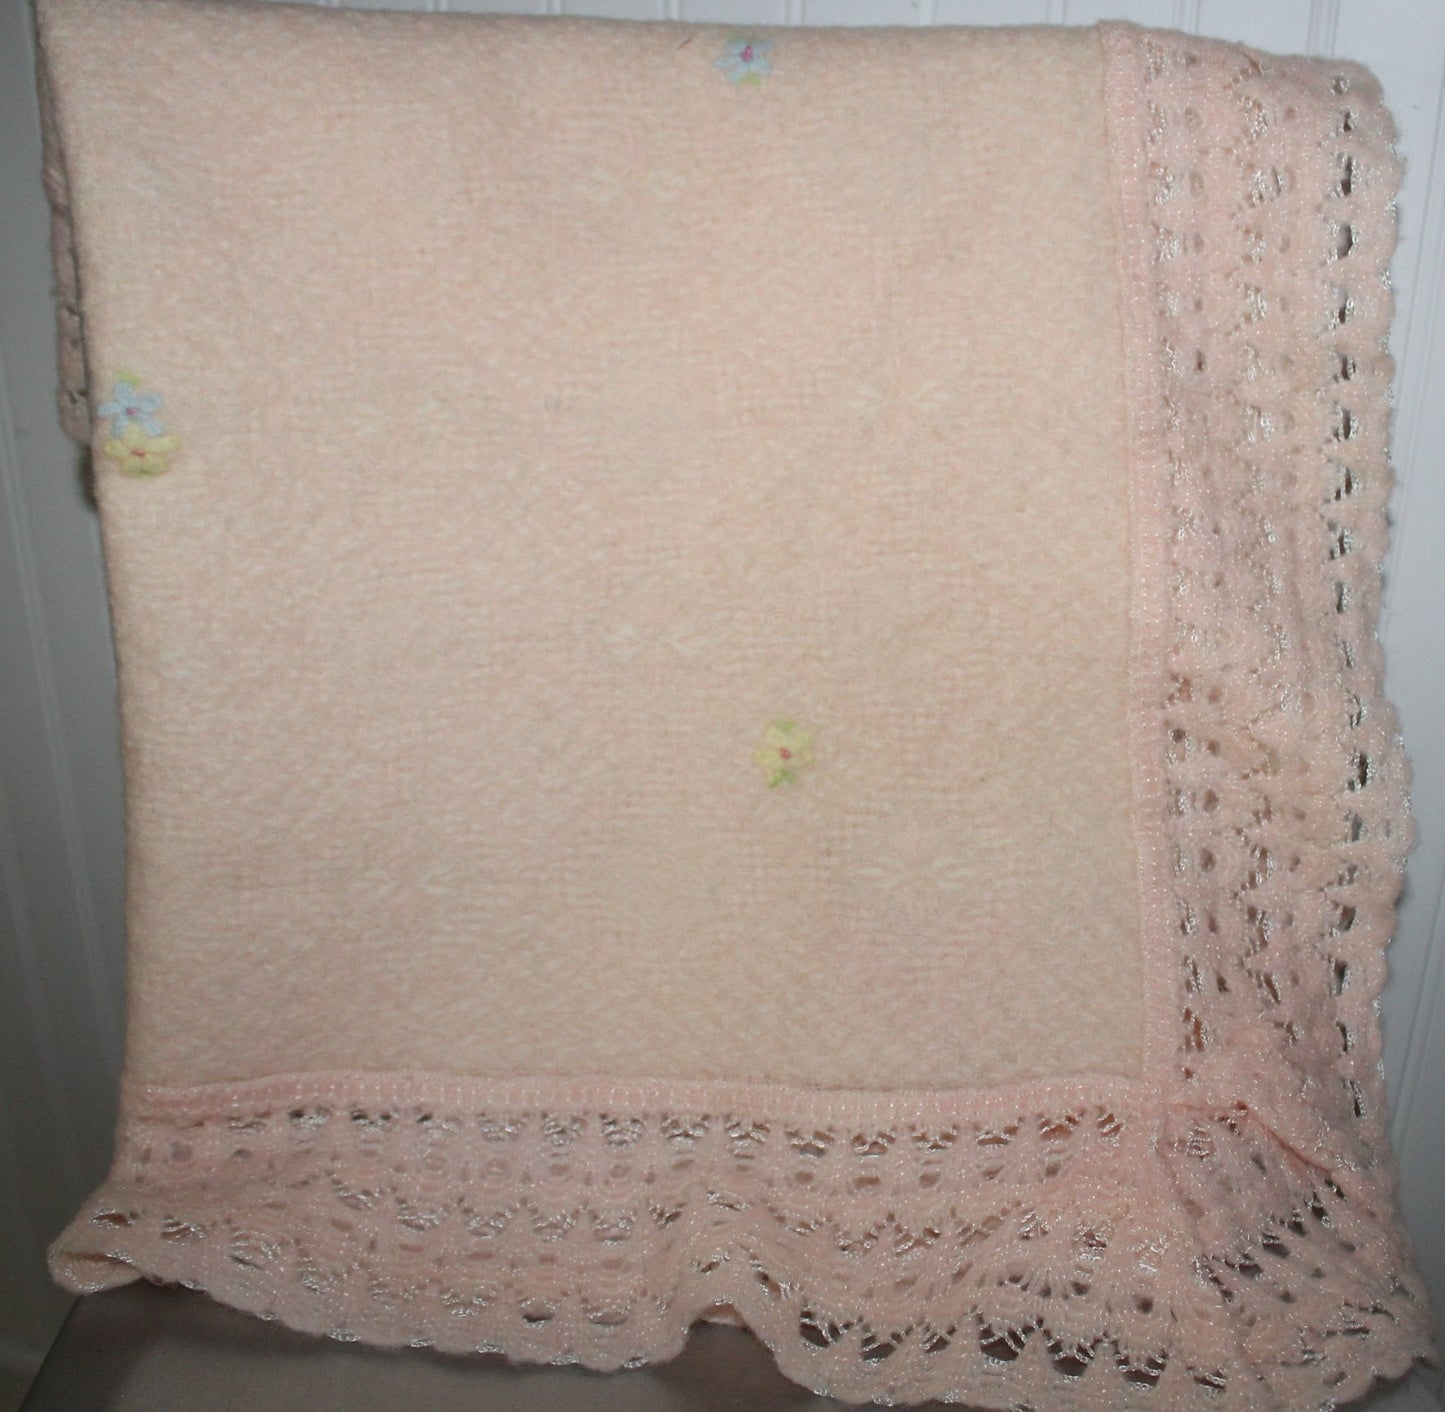 Unbranded Wool Blend Baby Crib Stroller Blanket - Elegant Embroidered Peach - 34" X 25" used